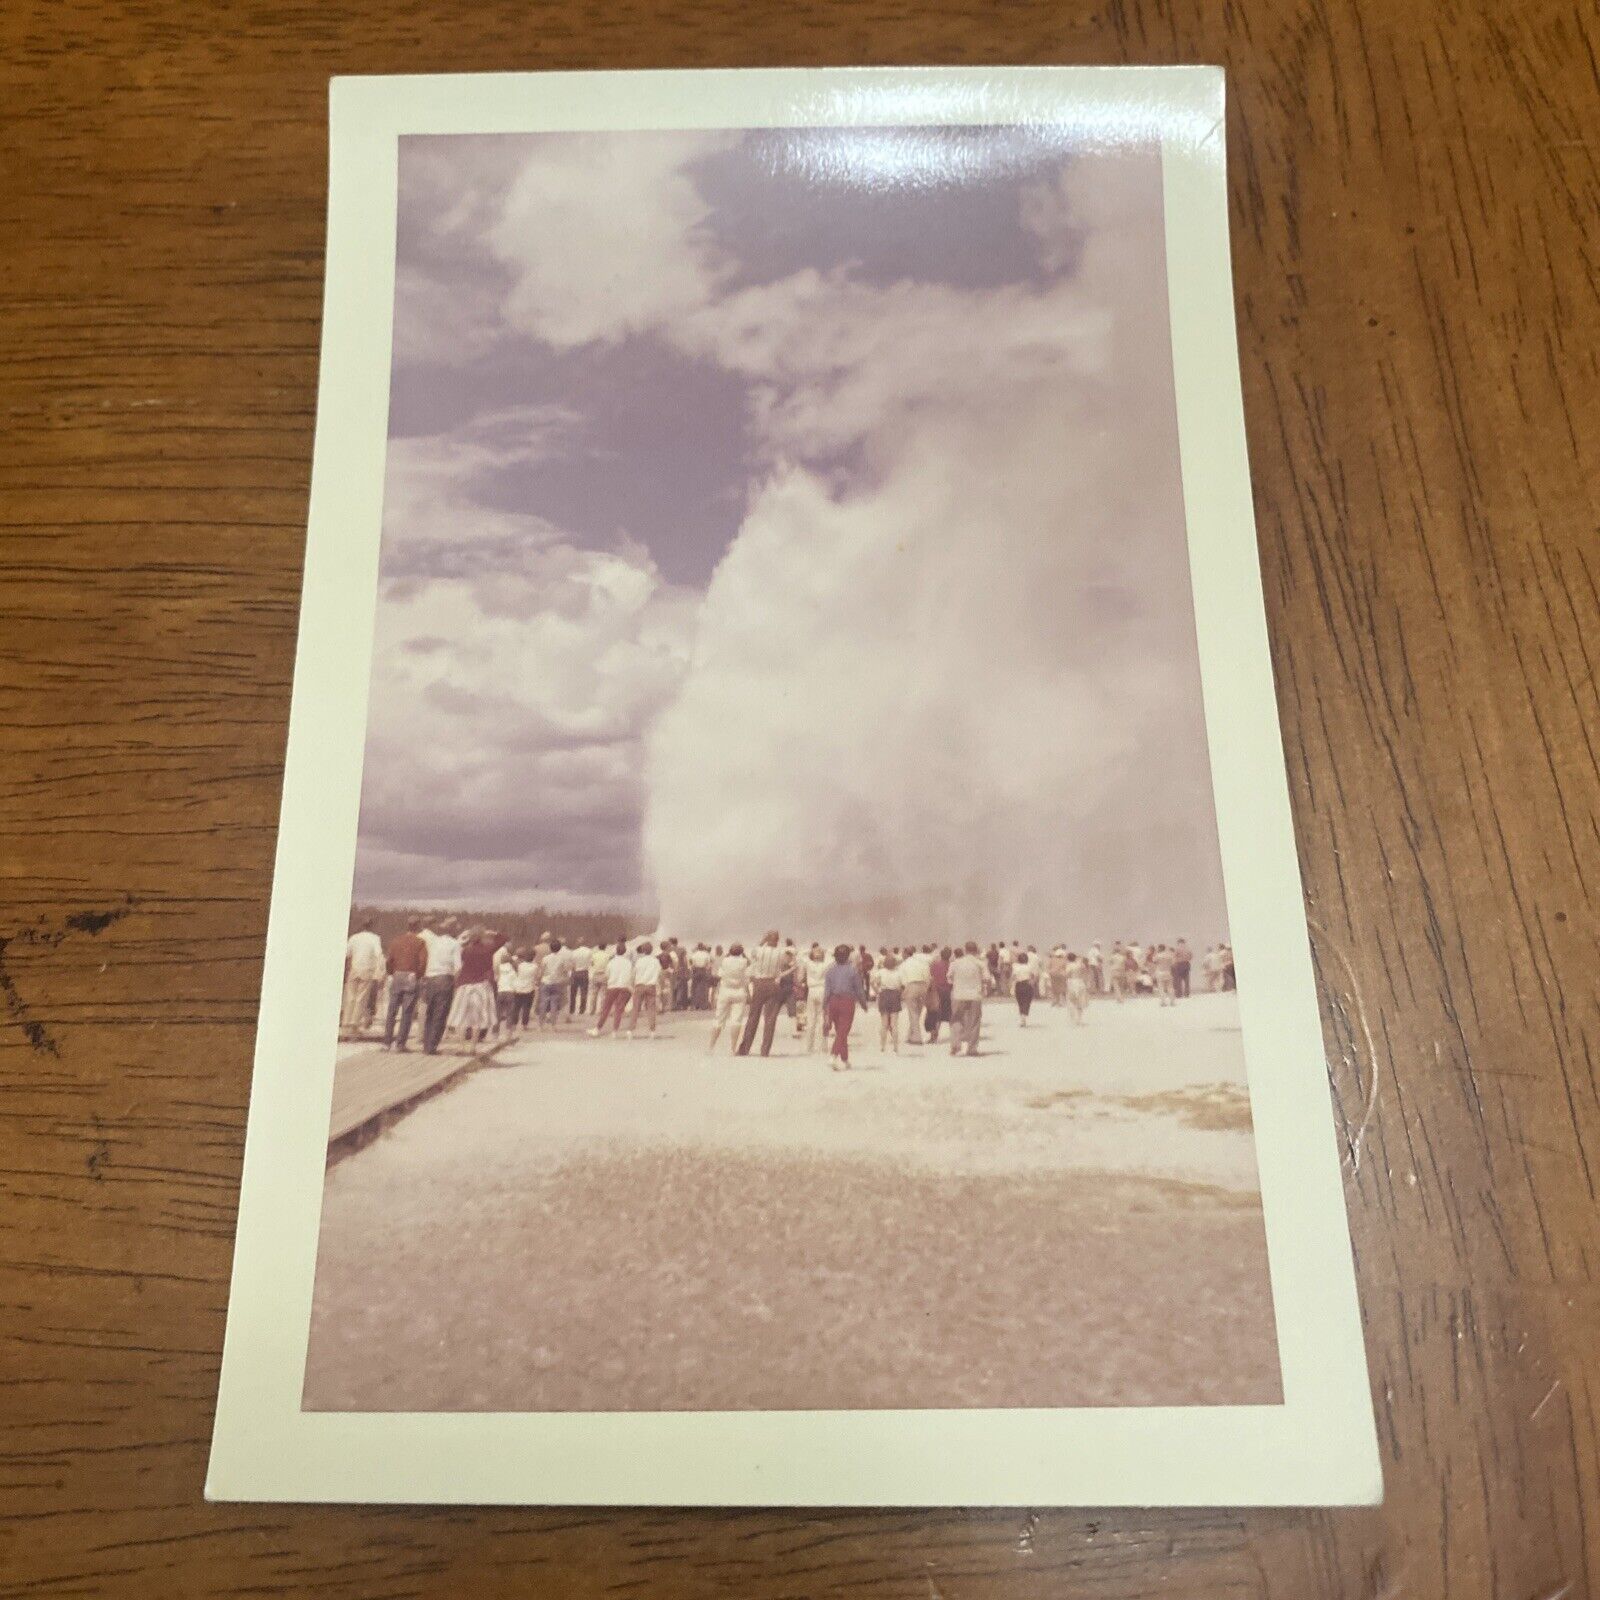 VTG Real Glossy Color Kodak Photo of Old Faithful Yellowstone Taken April 1959